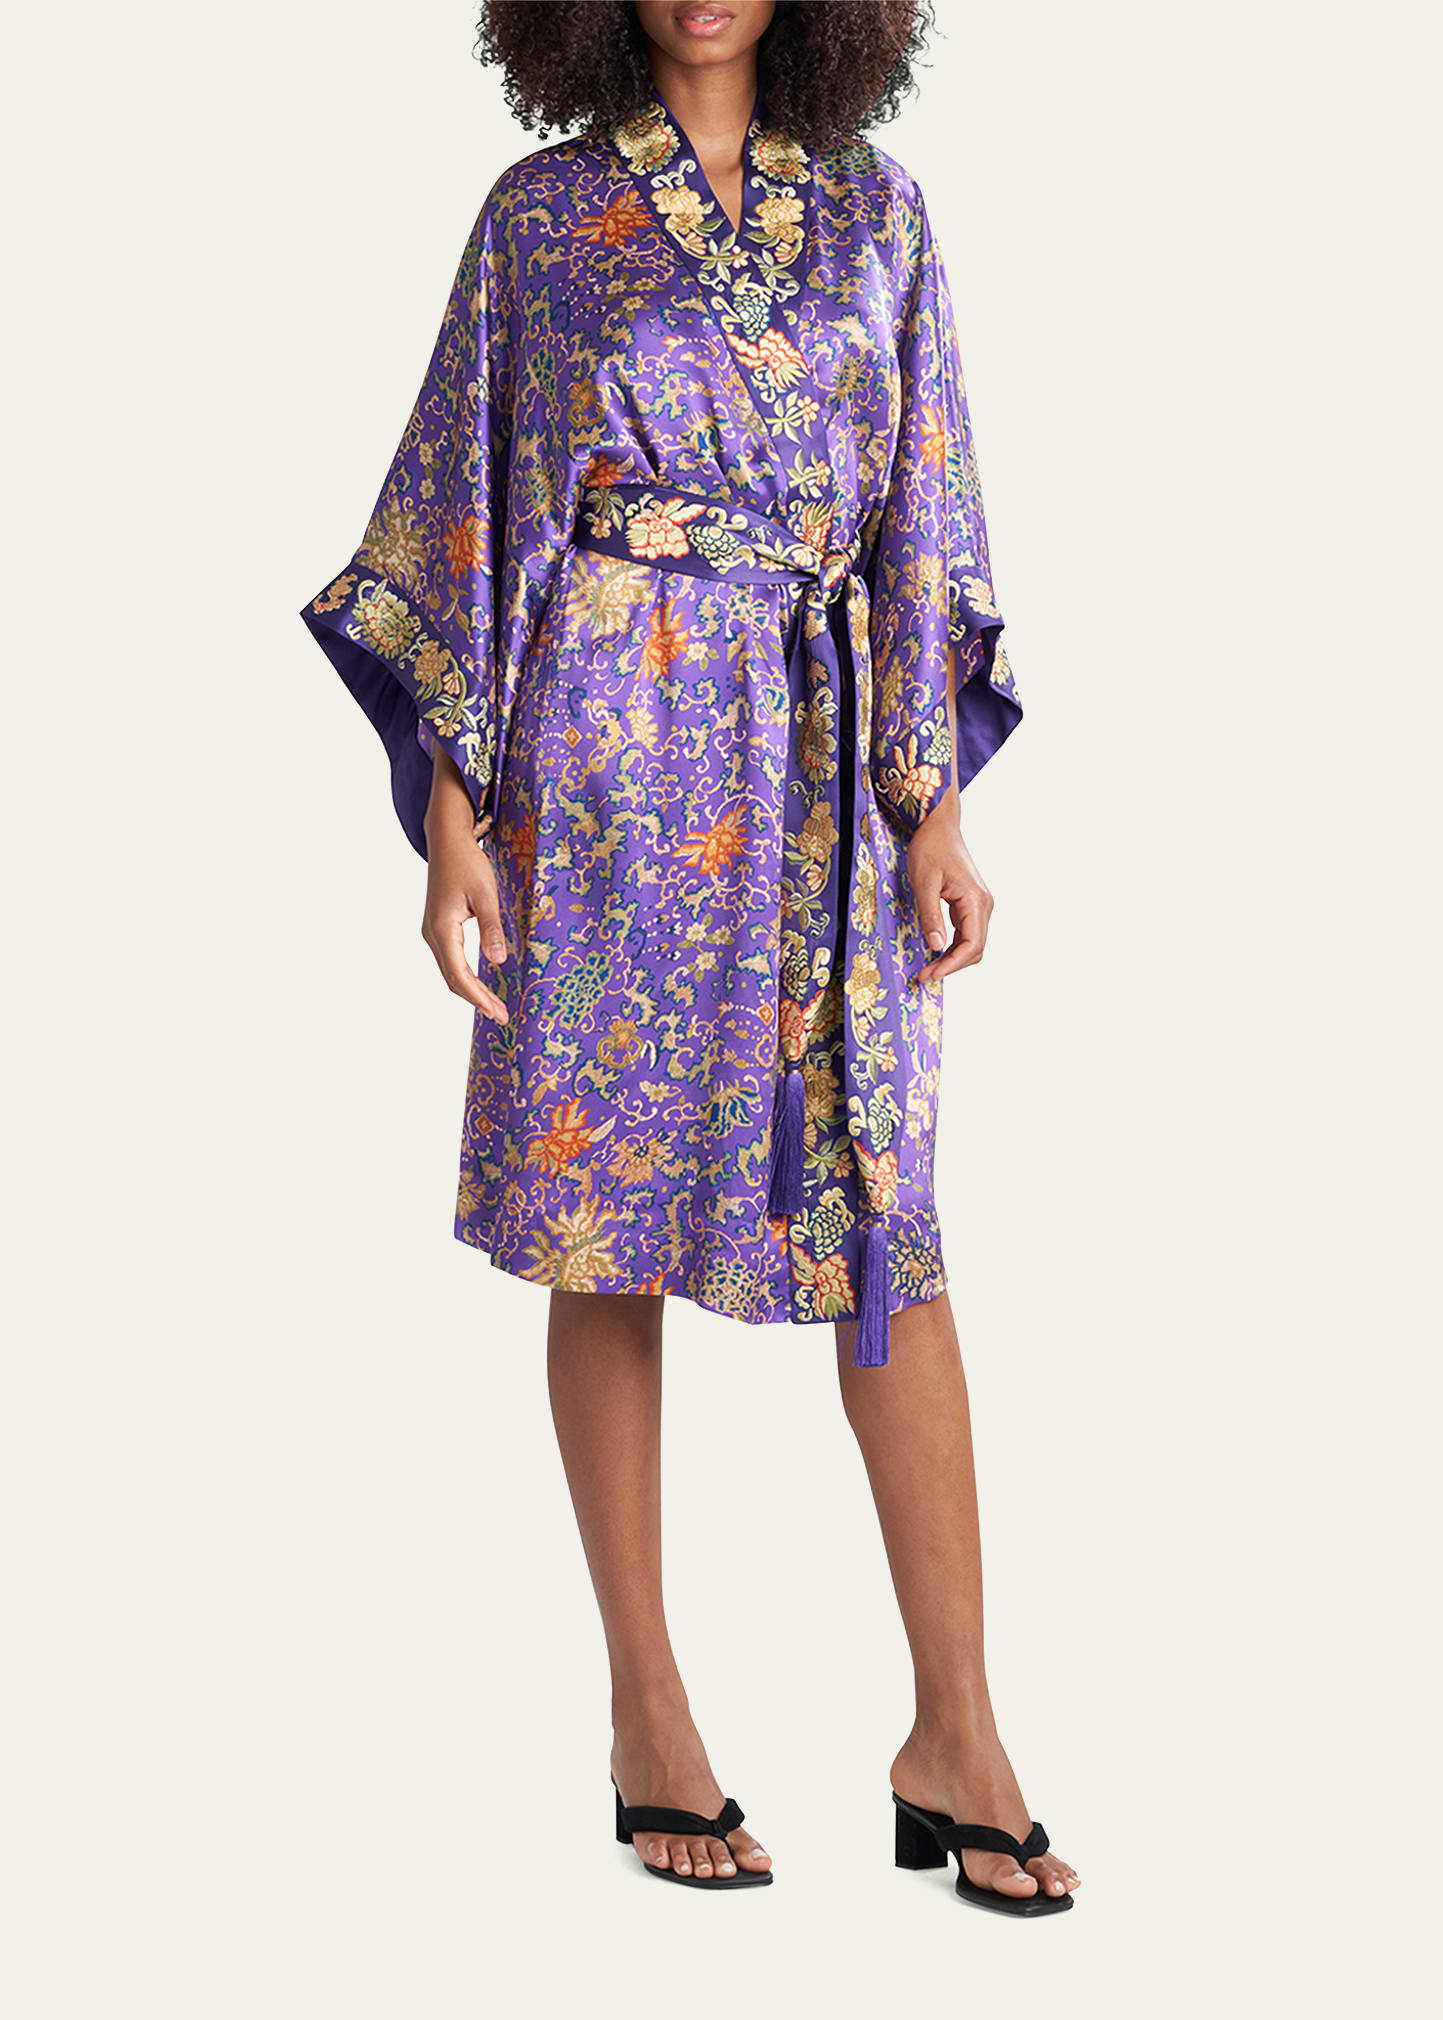 Josie Natori Short Belted Embellished Silk Robe